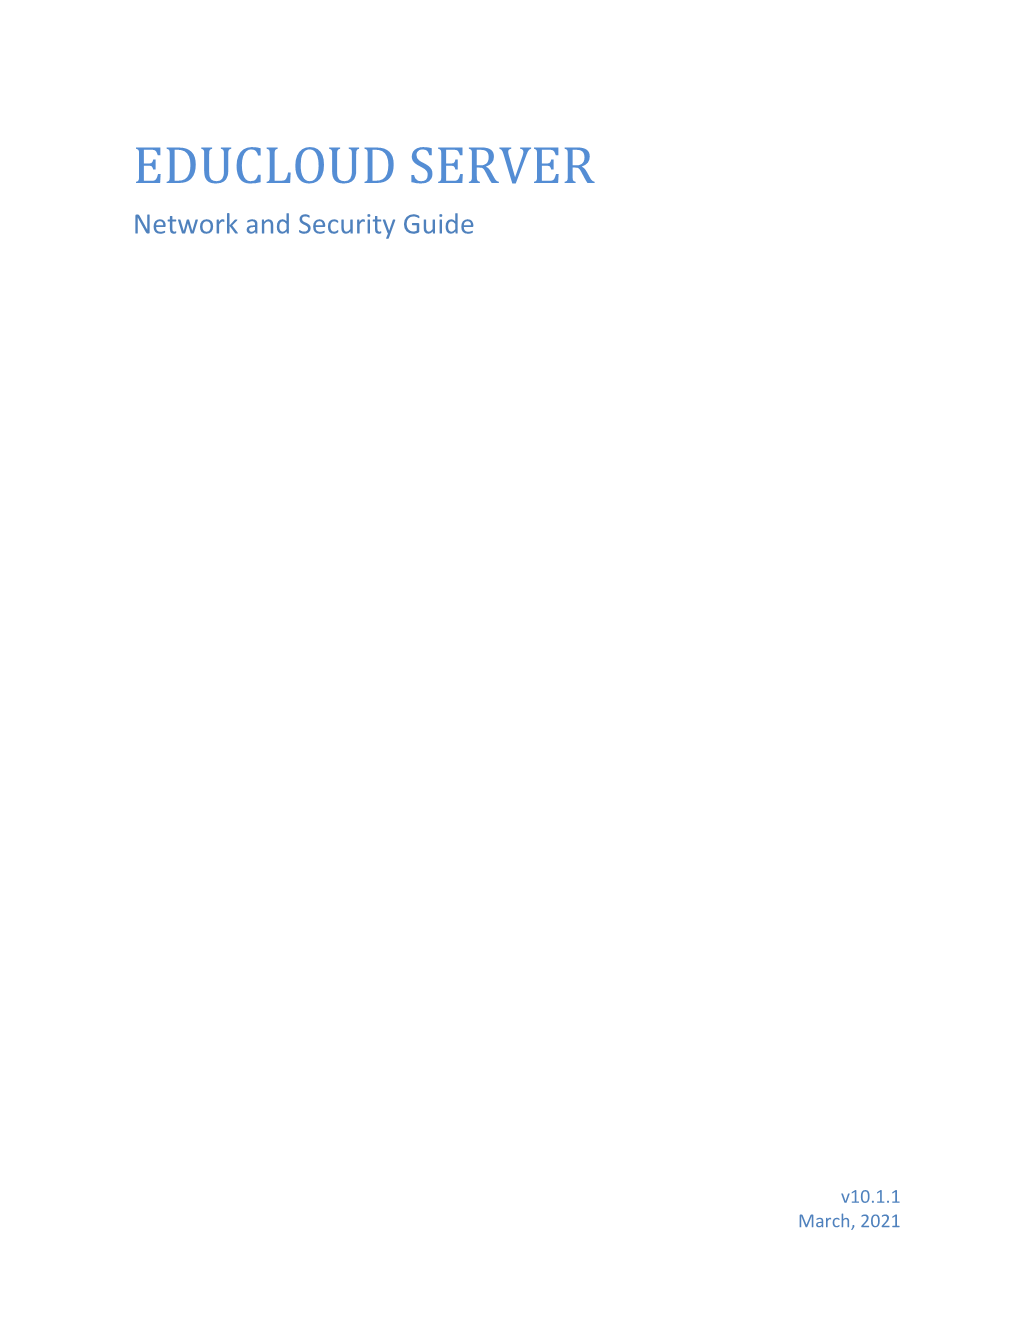 Educloud Server